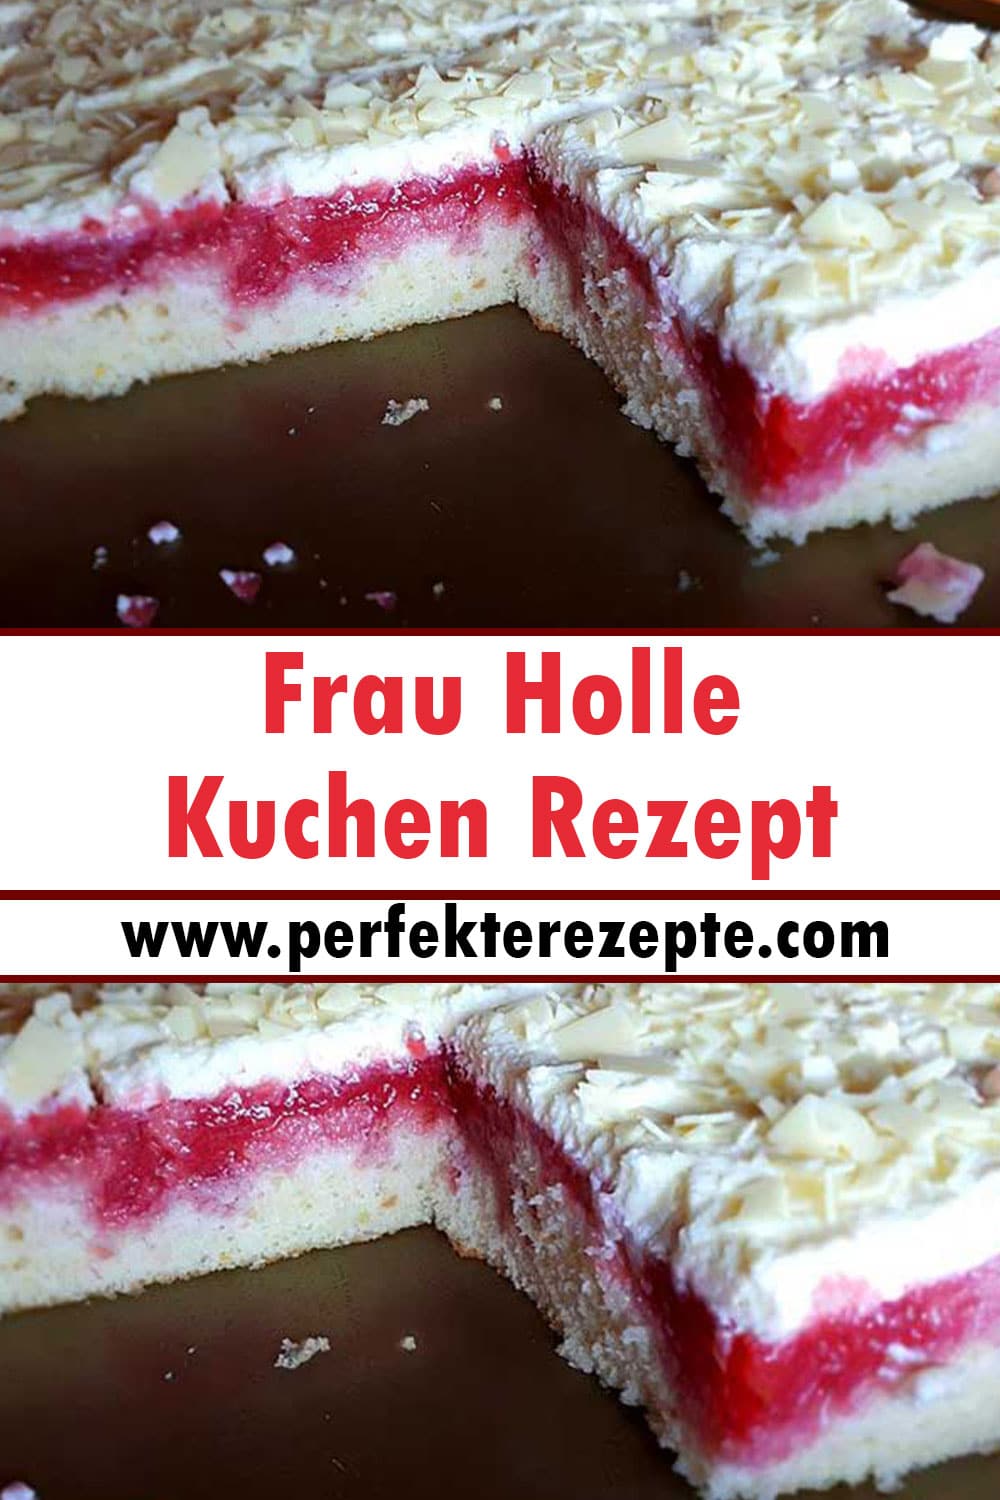 Frau Holle Kuchen Rezept